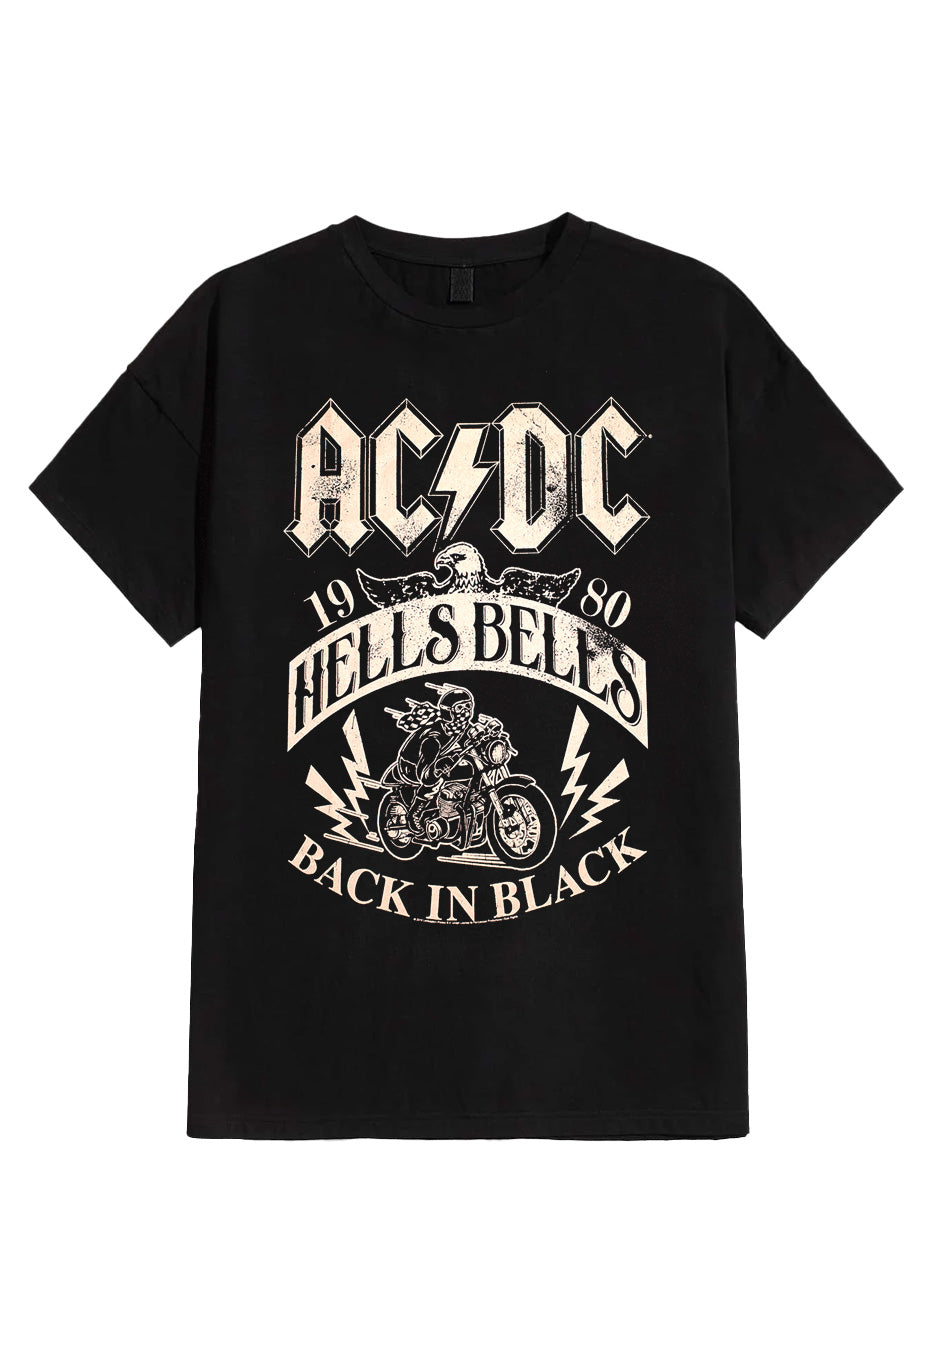 AC/DC - Hells Bells 1980 - T-Shirt